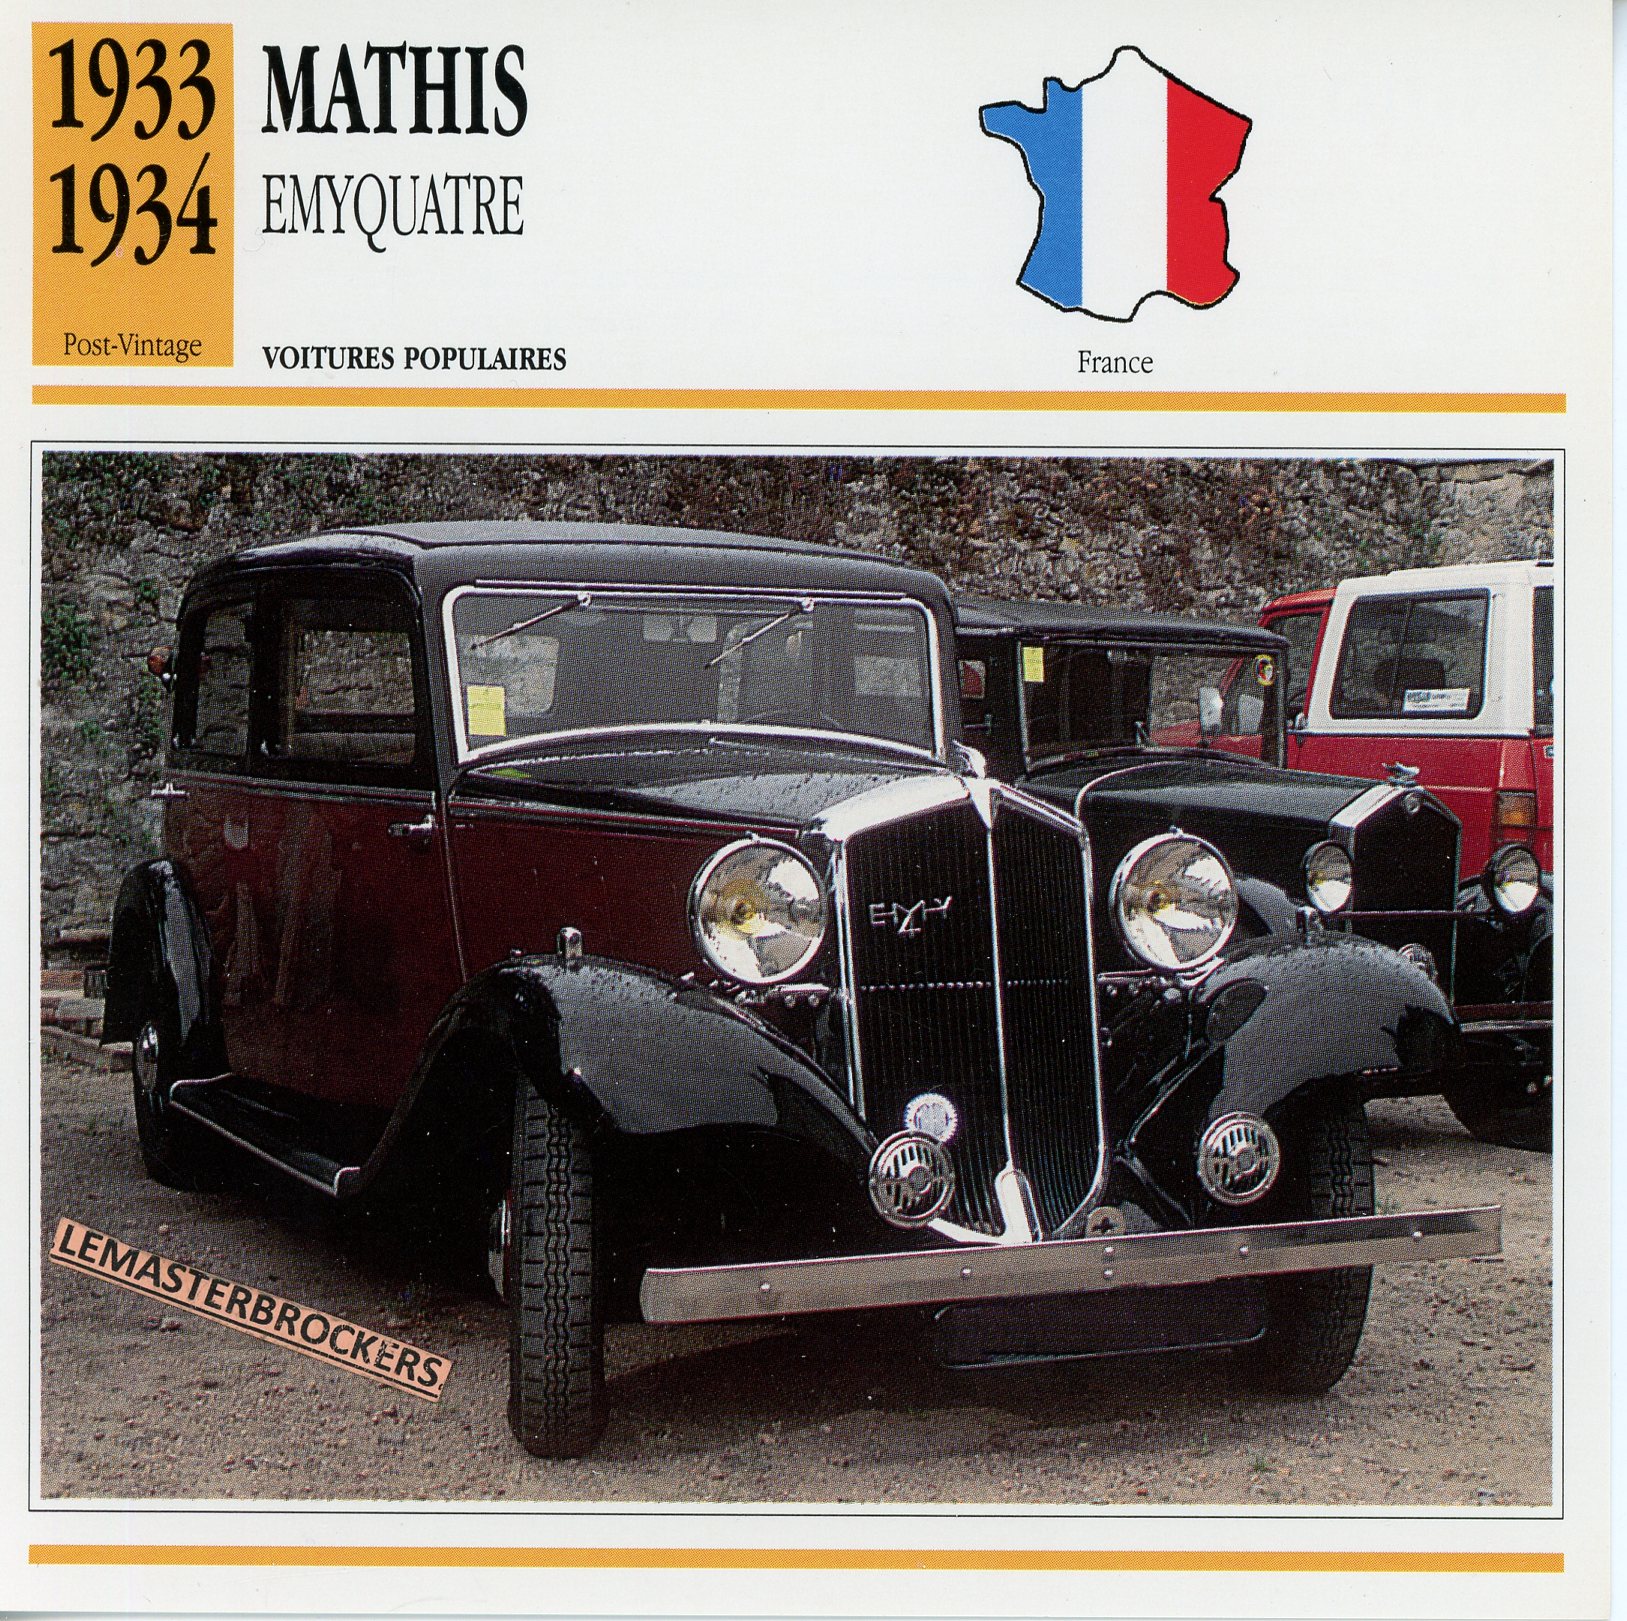 MATHIS-EMYQUATRE-1933-1934-FICHE-AUTO-ATLAS-LEMASTERBROCKERS